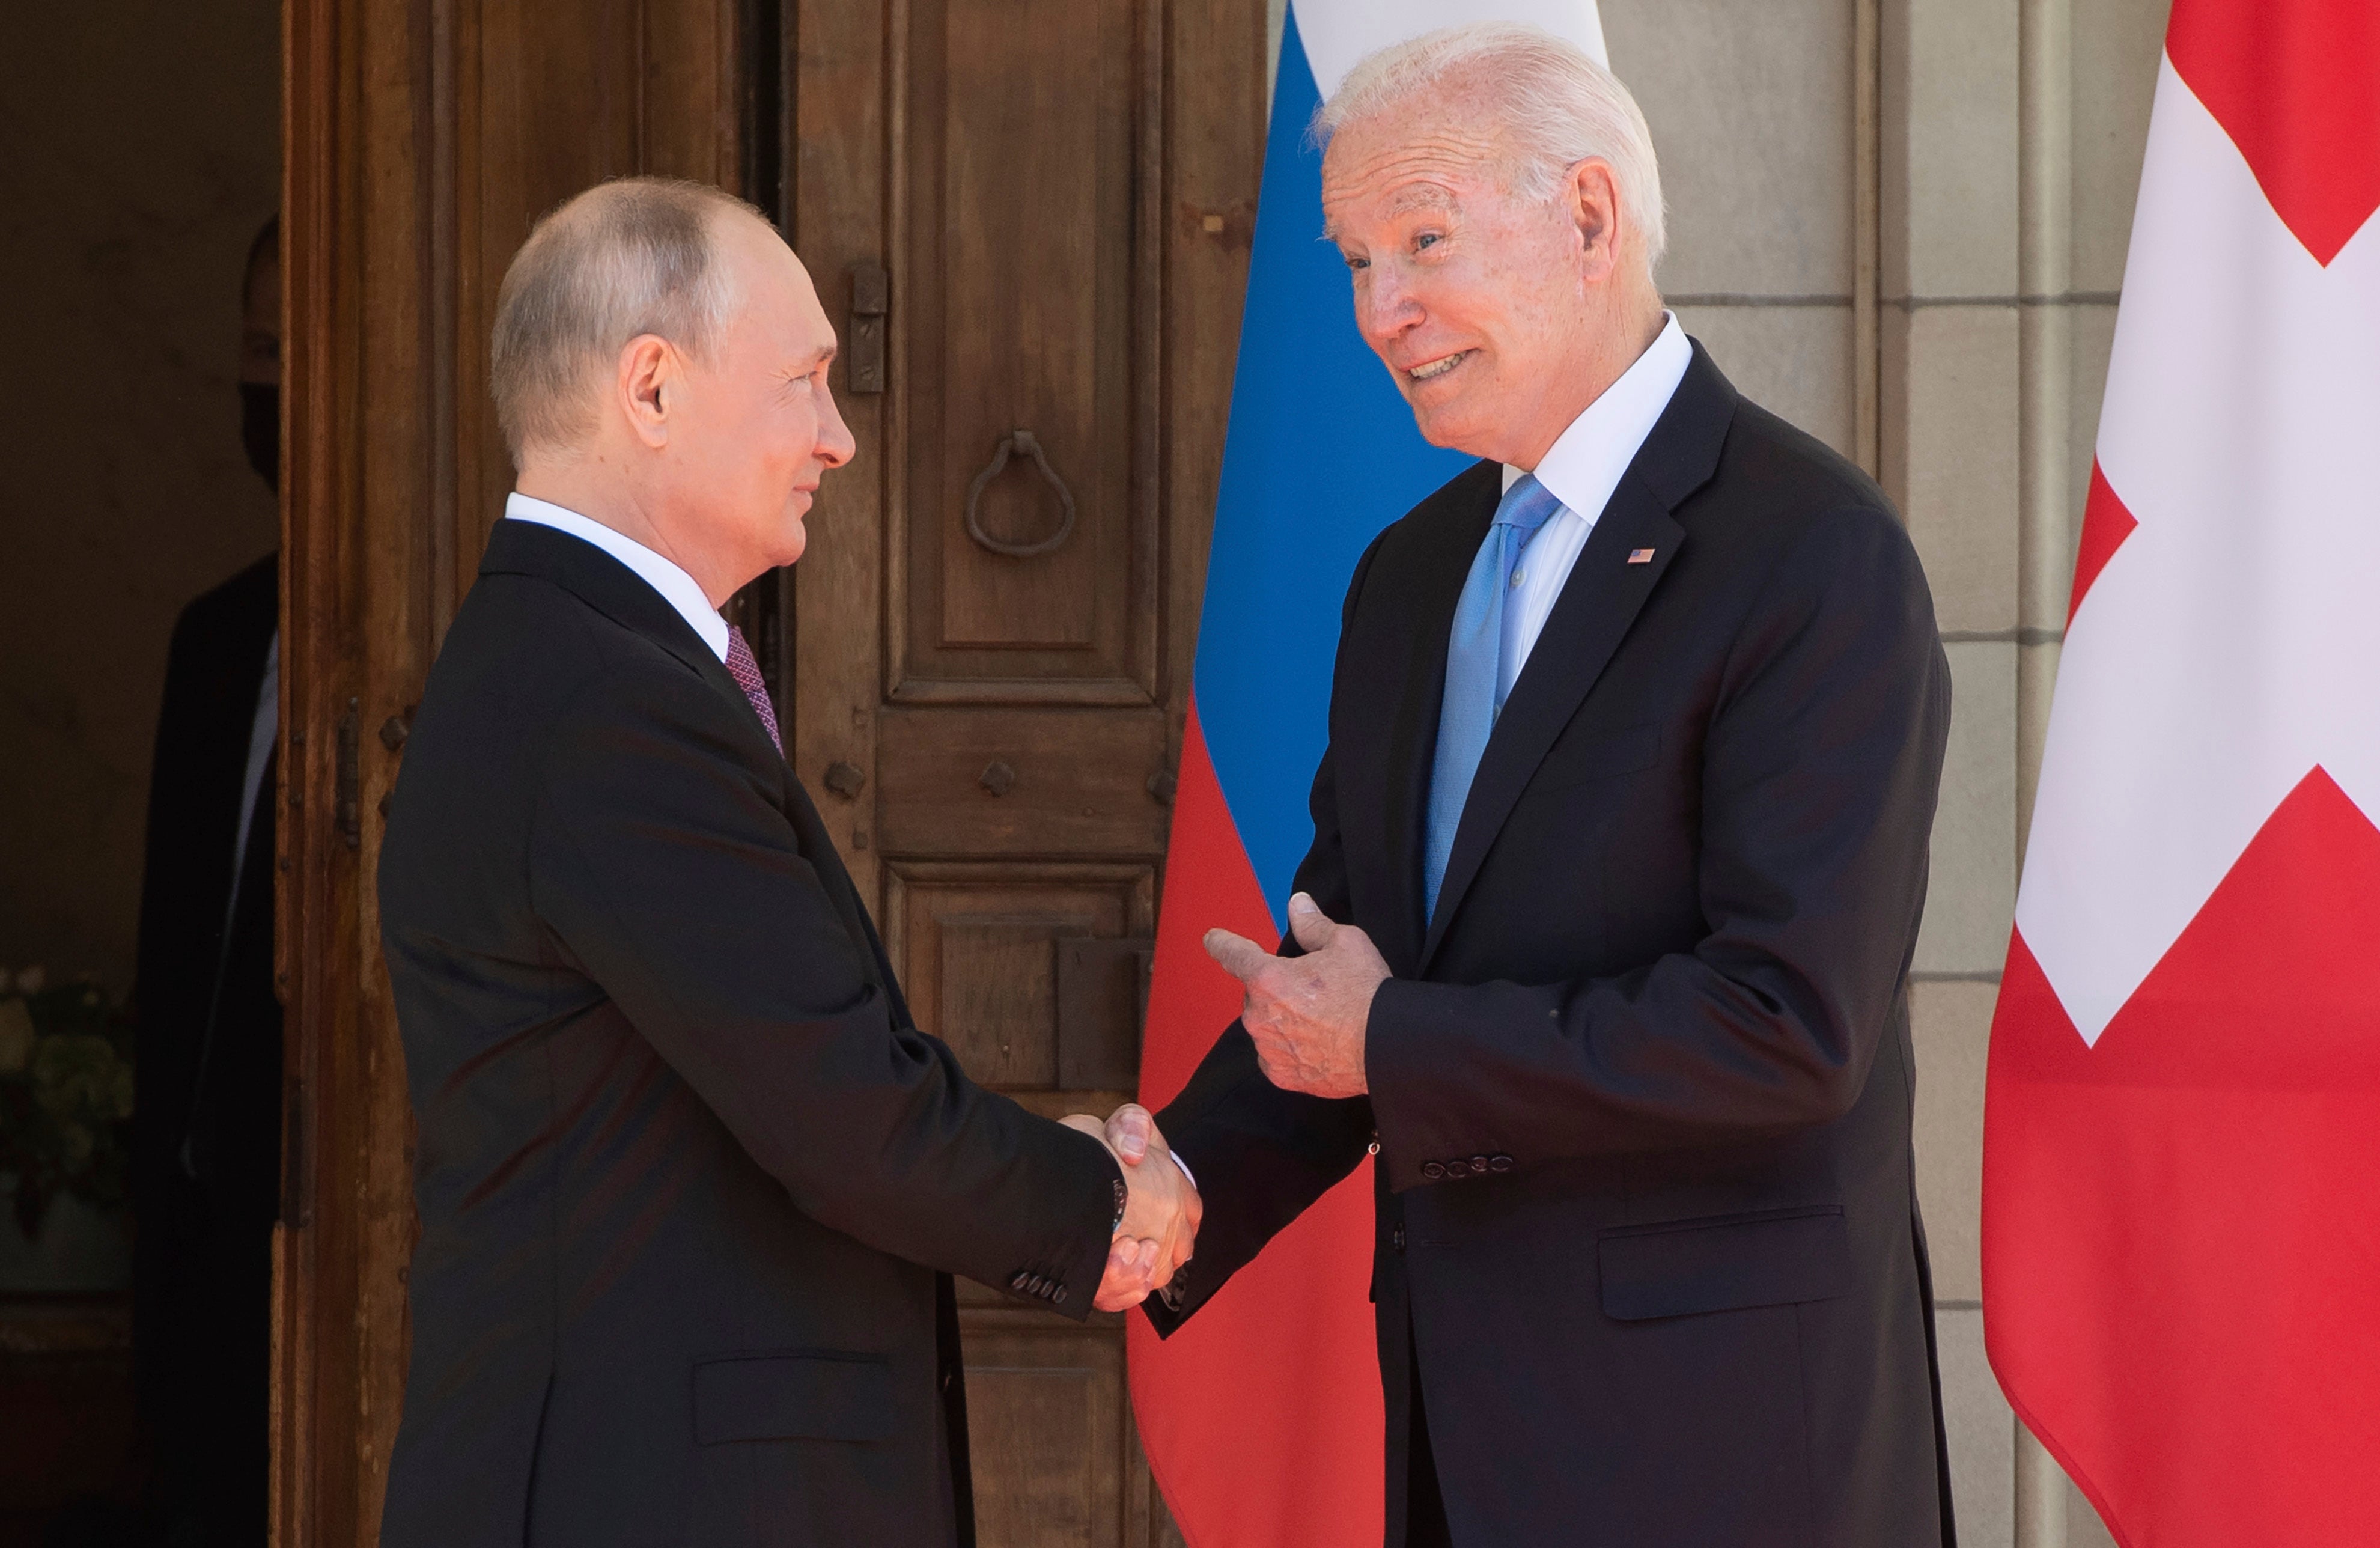 Vladimir Putin meets with Joe Biden in Geneva on Wednesday